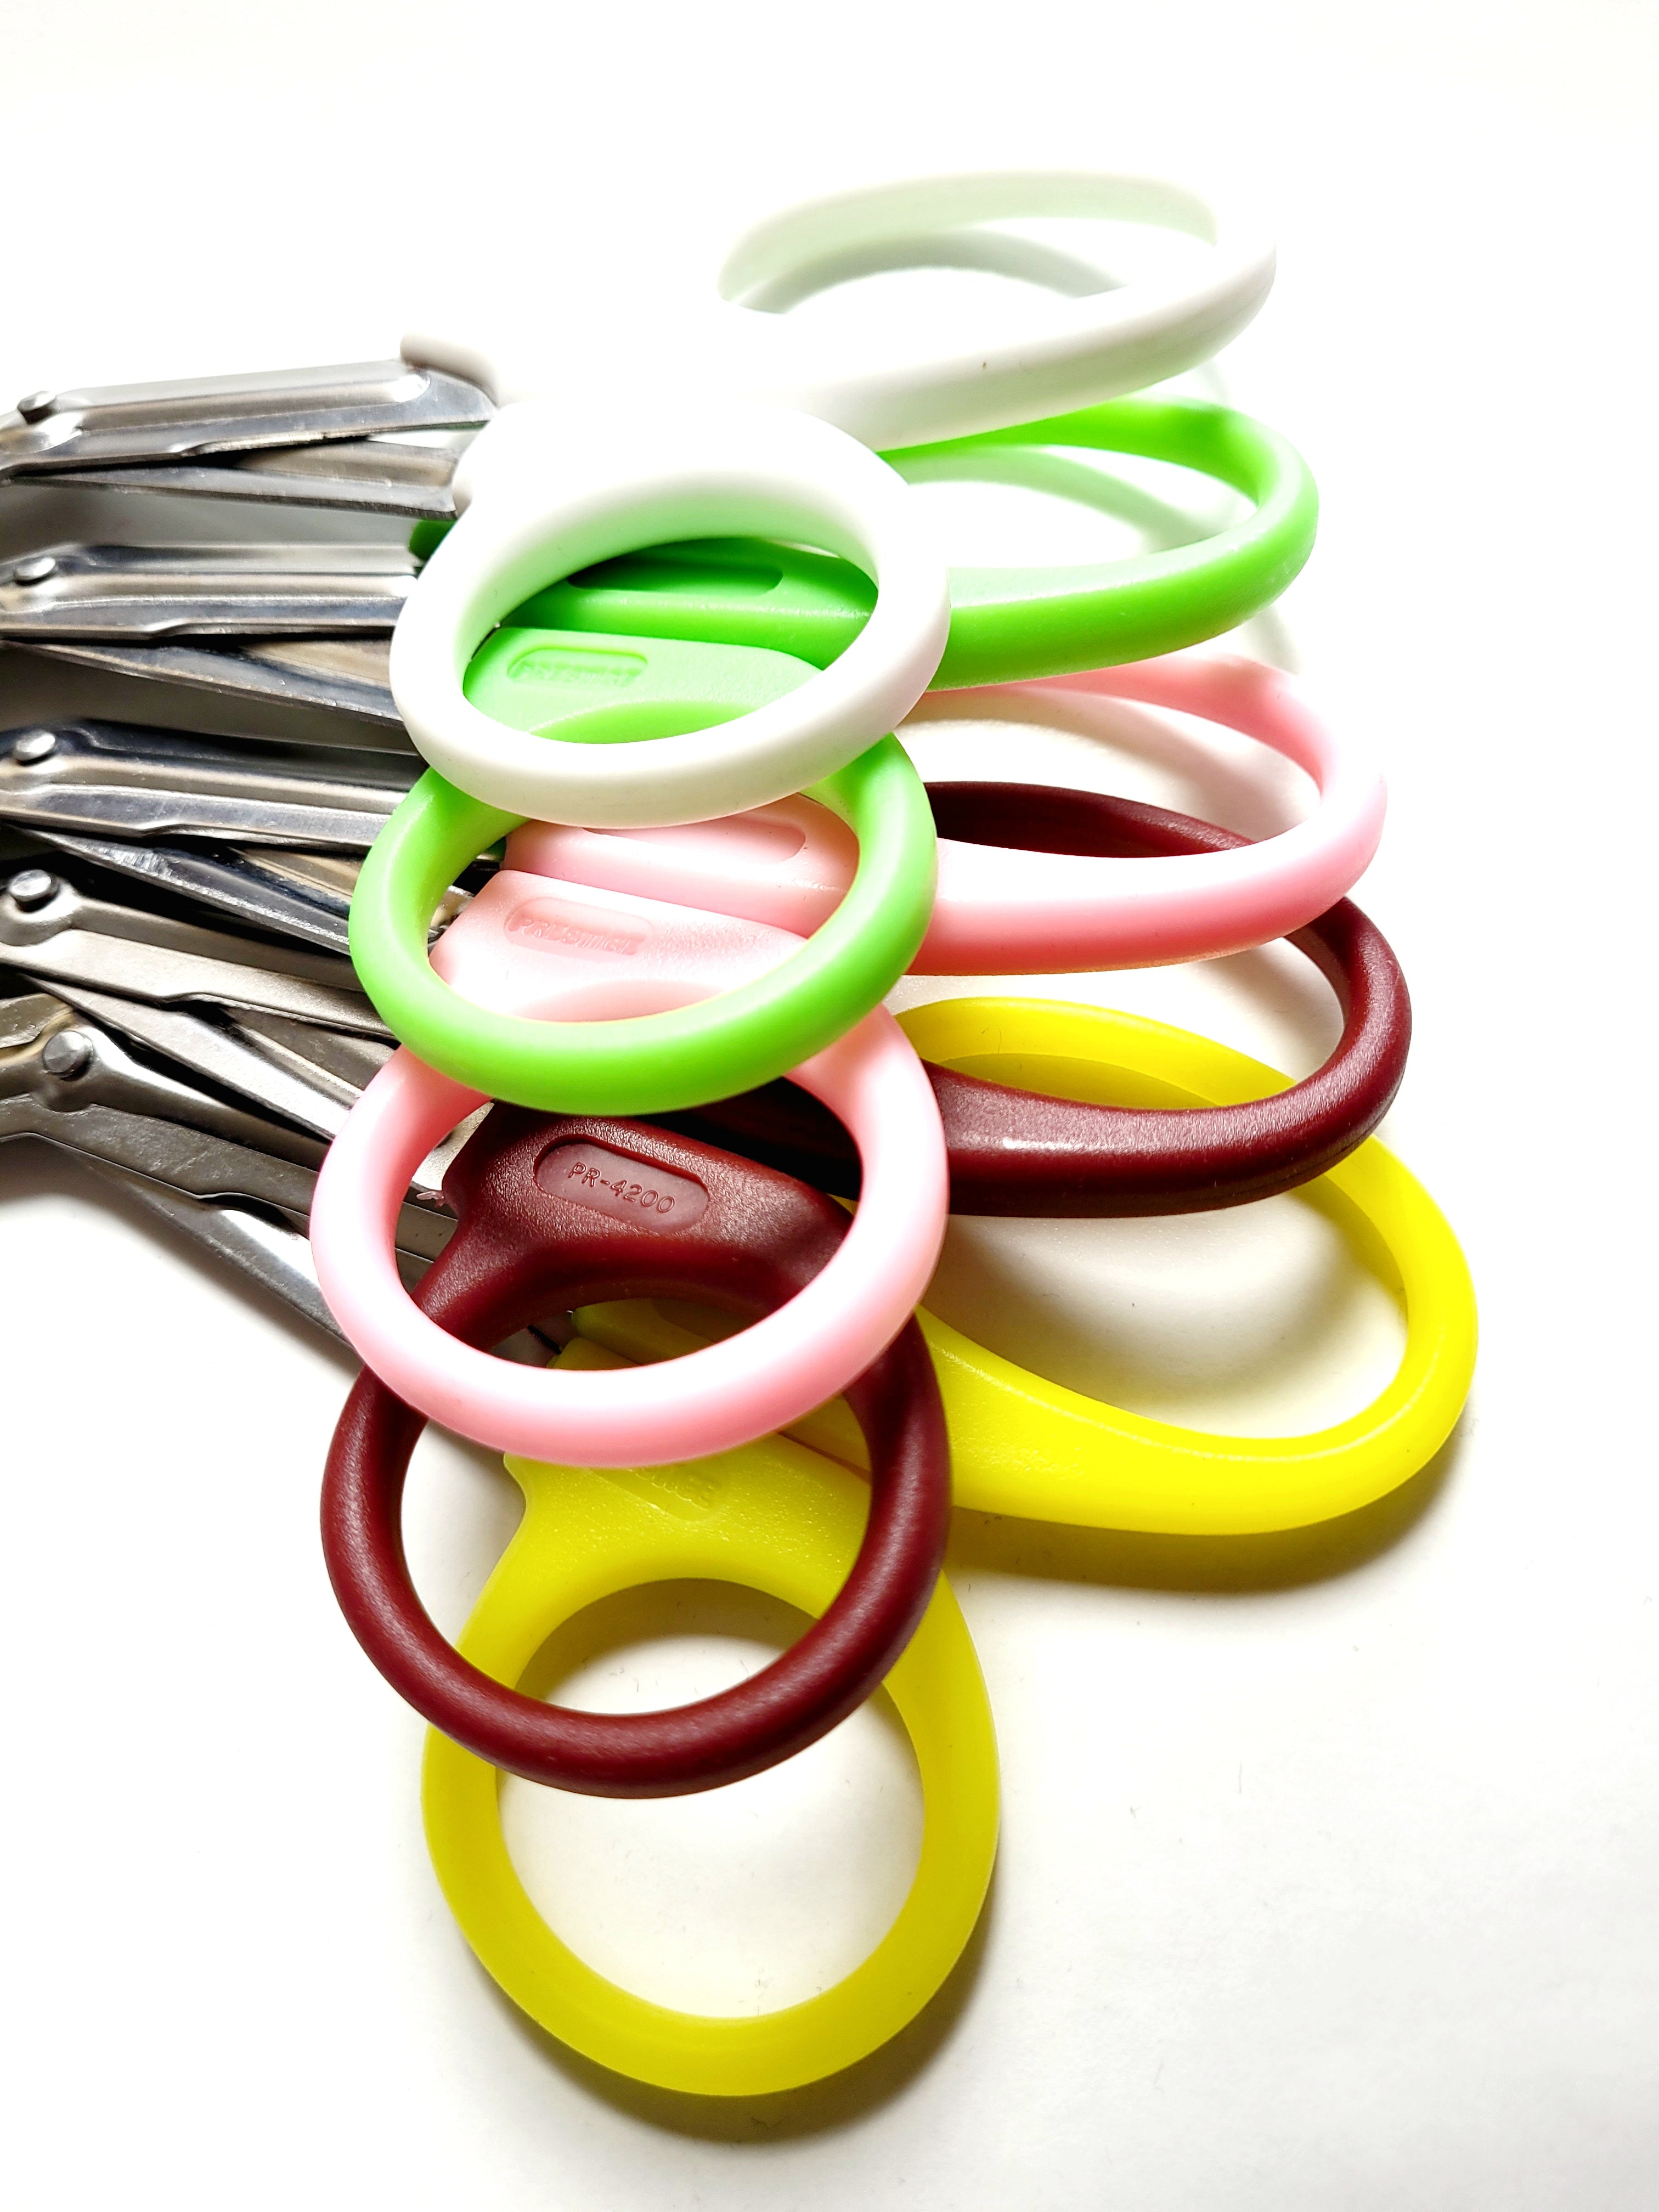 PR4-200 MK2 Universal bandage scissor w/tip in various colors, also EMS utility scissor 7.5in japan steel - 0